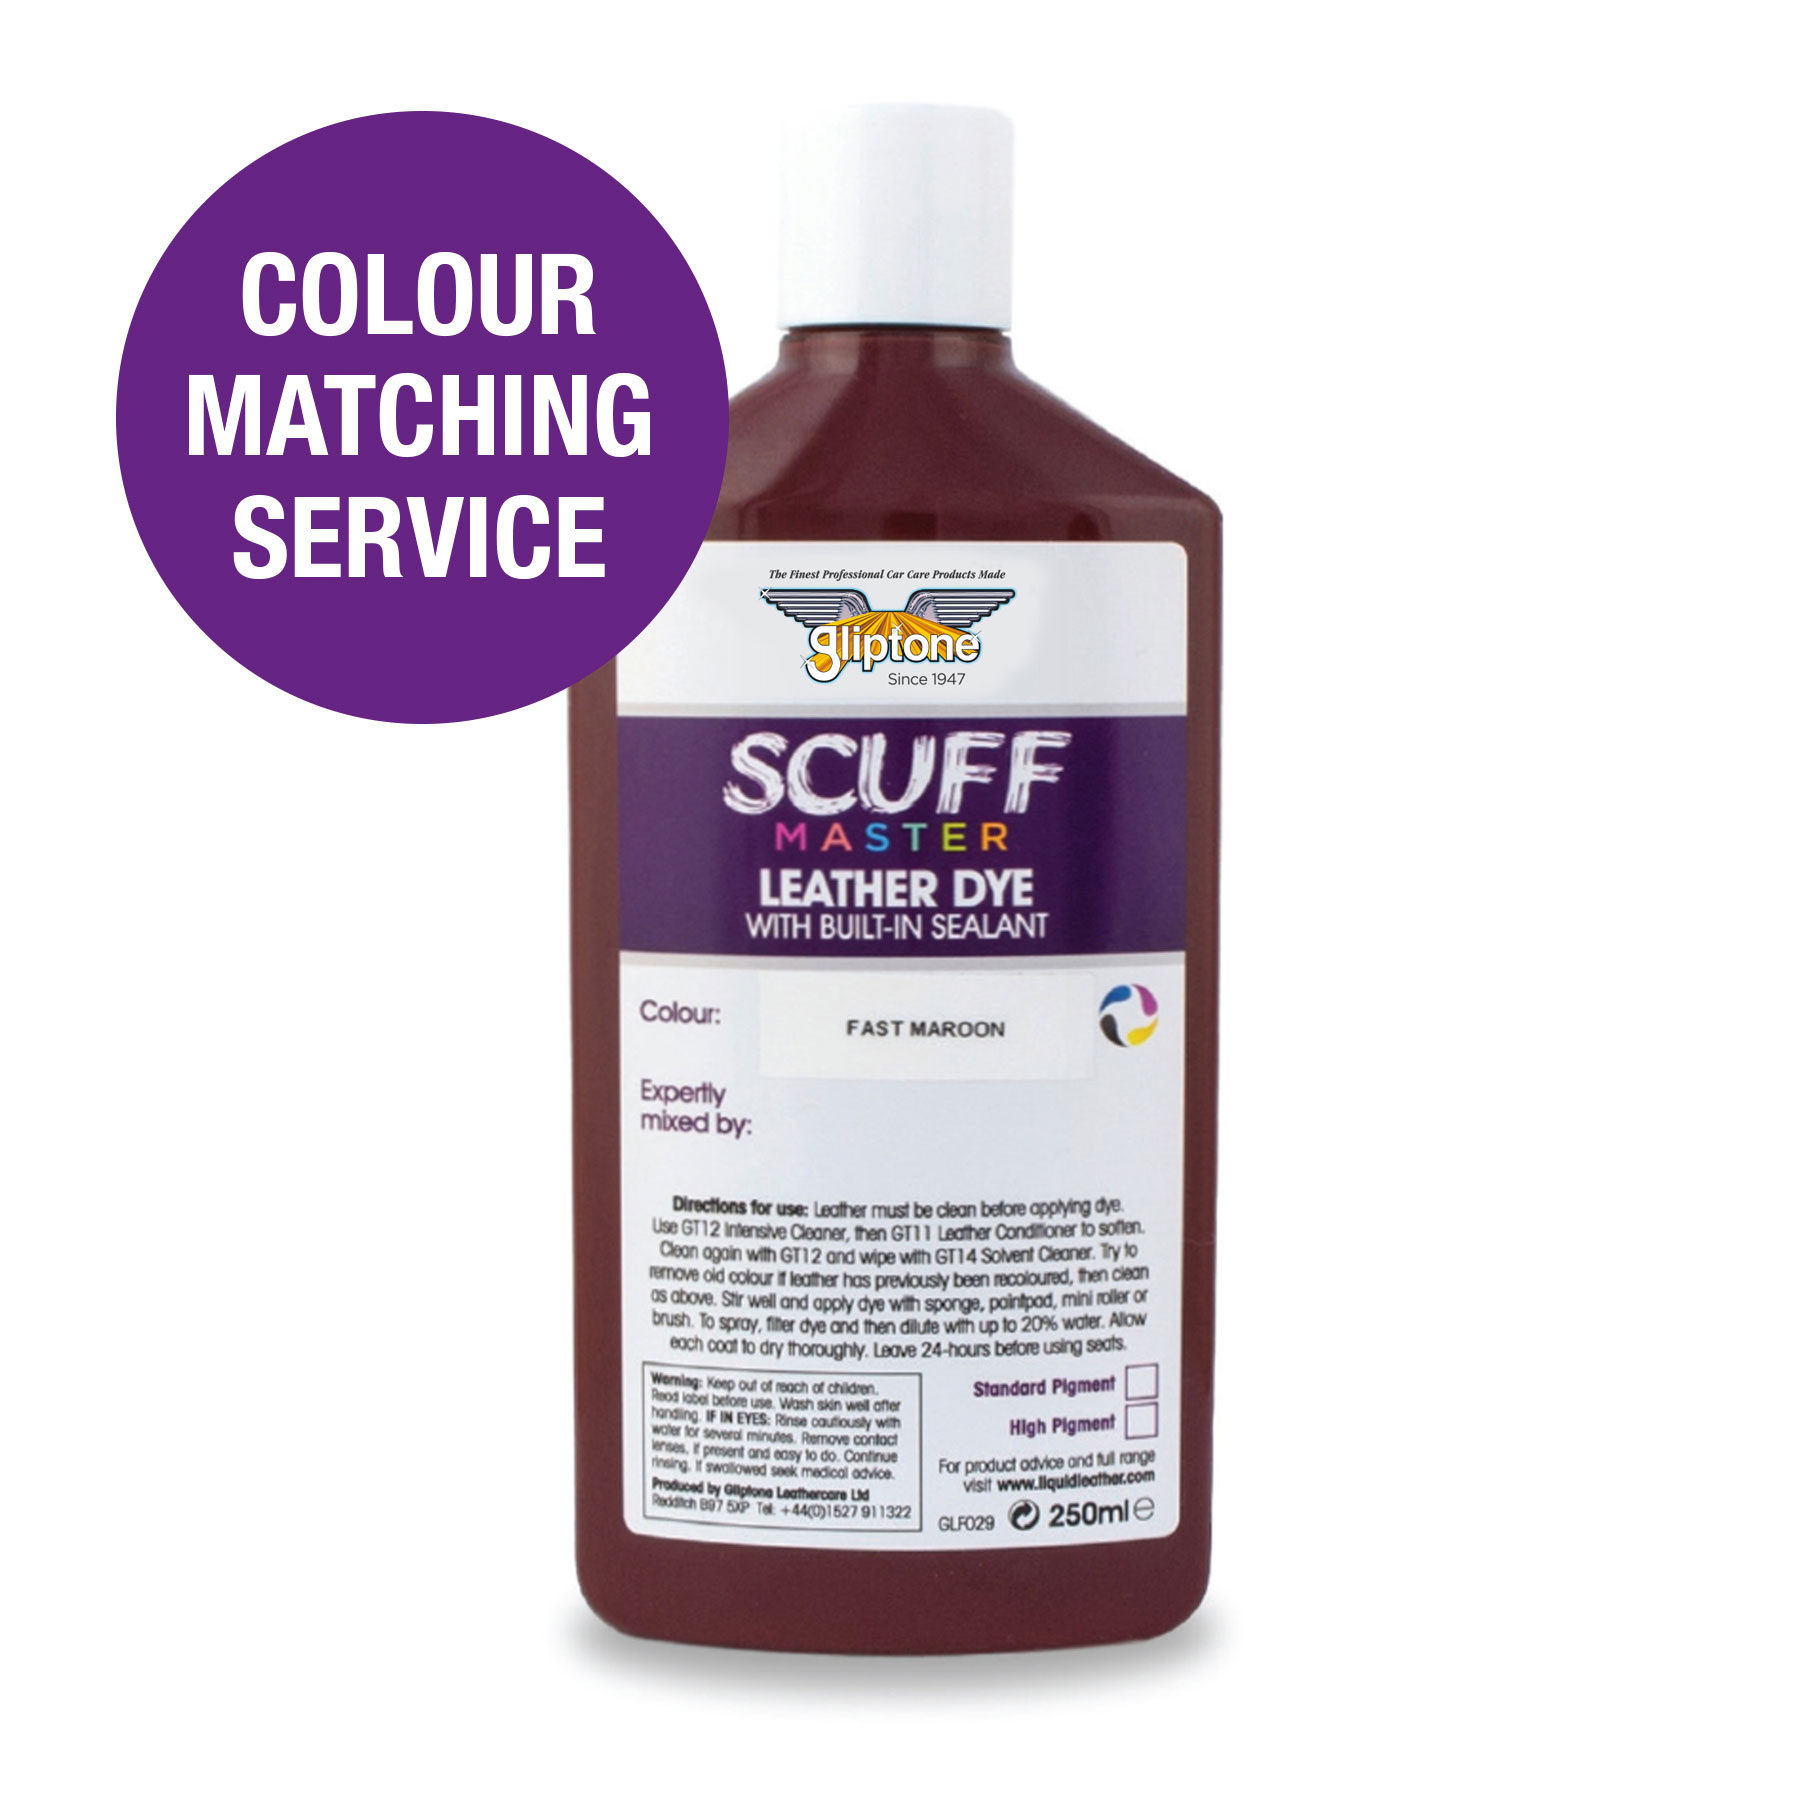 Leather Dye Paint Claret – buy in UK online shop –HD Chemicals LTD